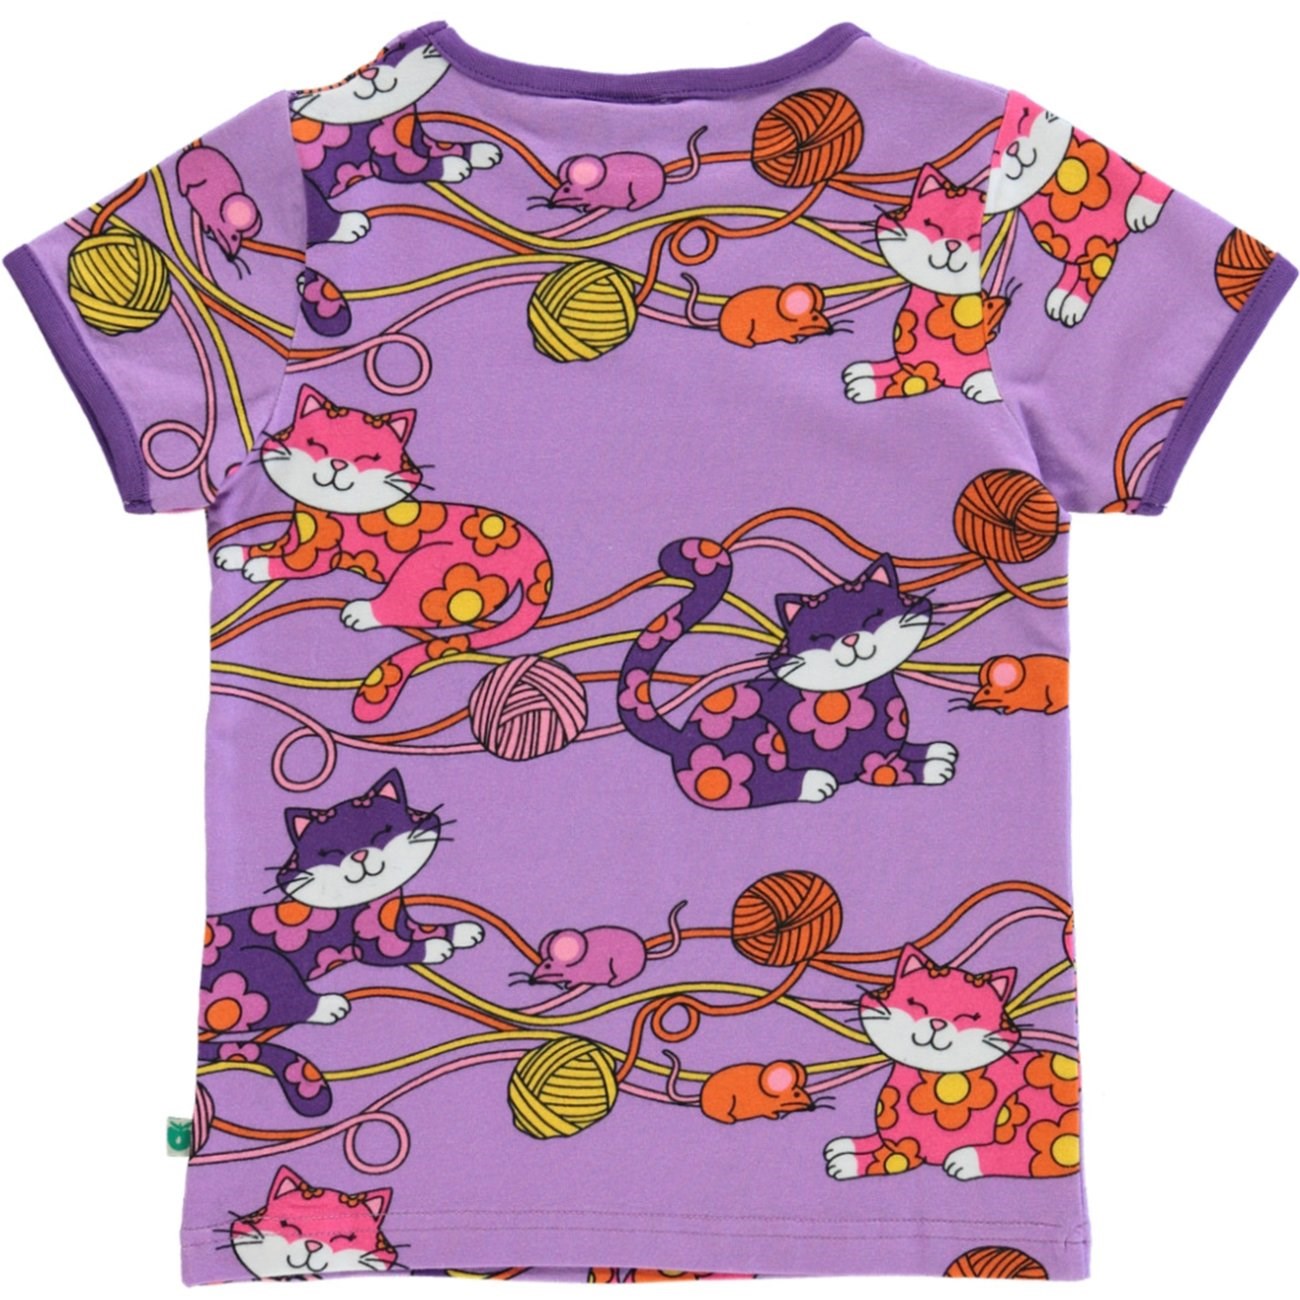 Småfolk Viola T-skjorte Med Katter